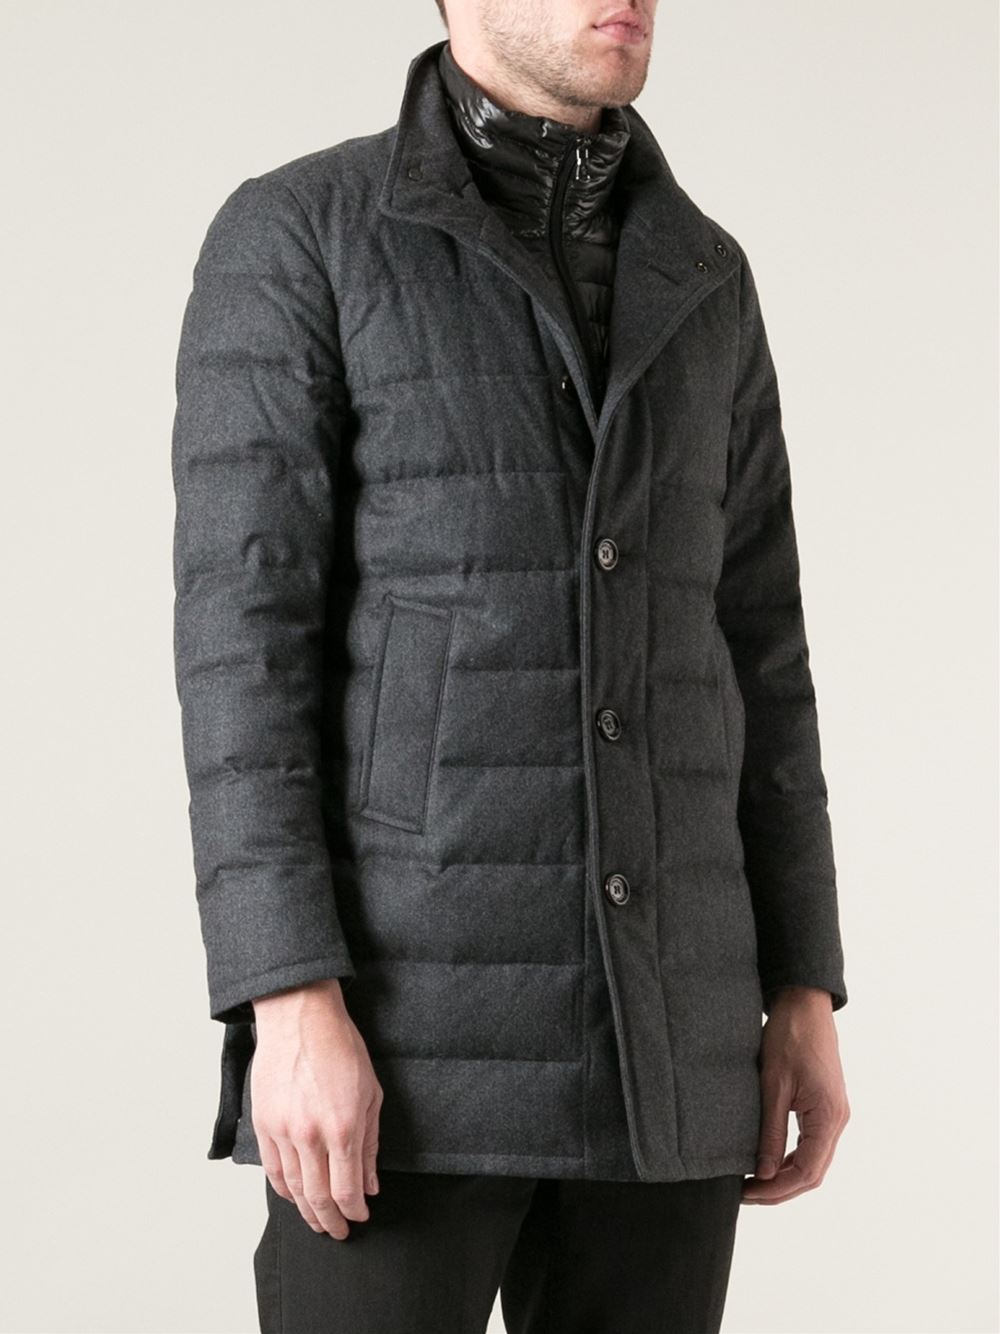 Moncler Vallier Jacket in Grey (Grey) for Men - Lyst